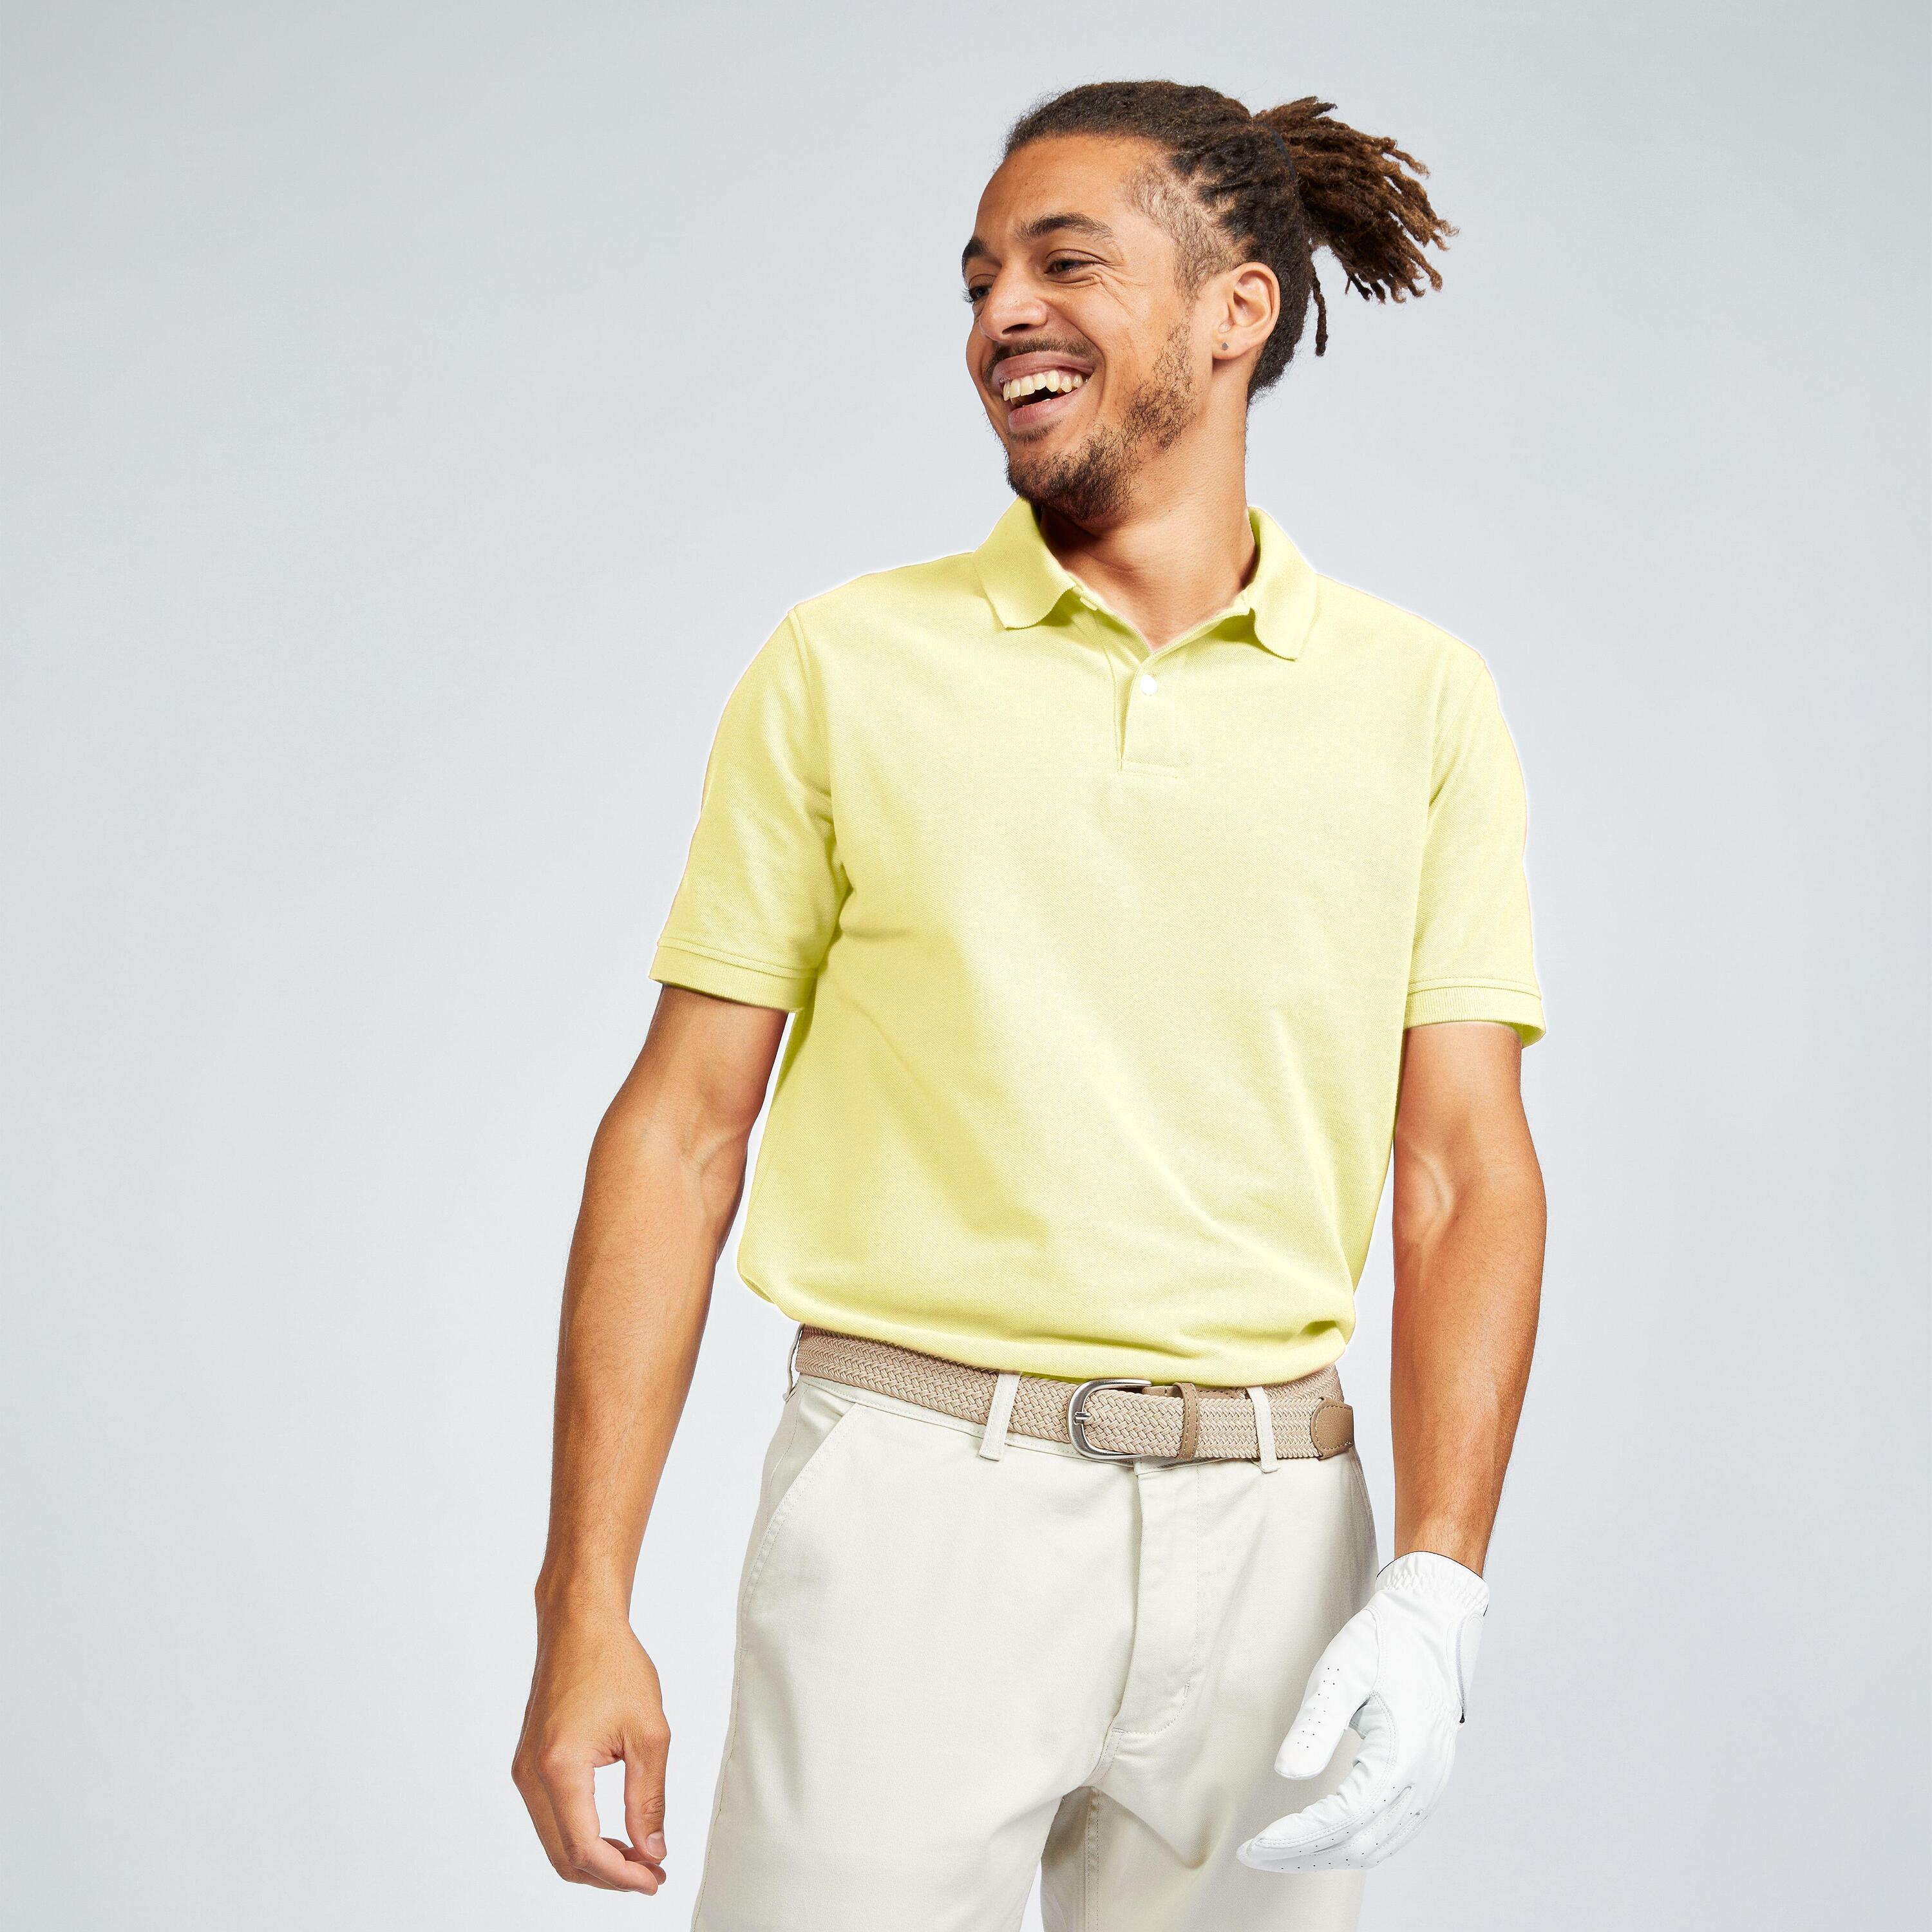 INESIS Men's short-sleeved golf polo shirt - MW500 pale yellow